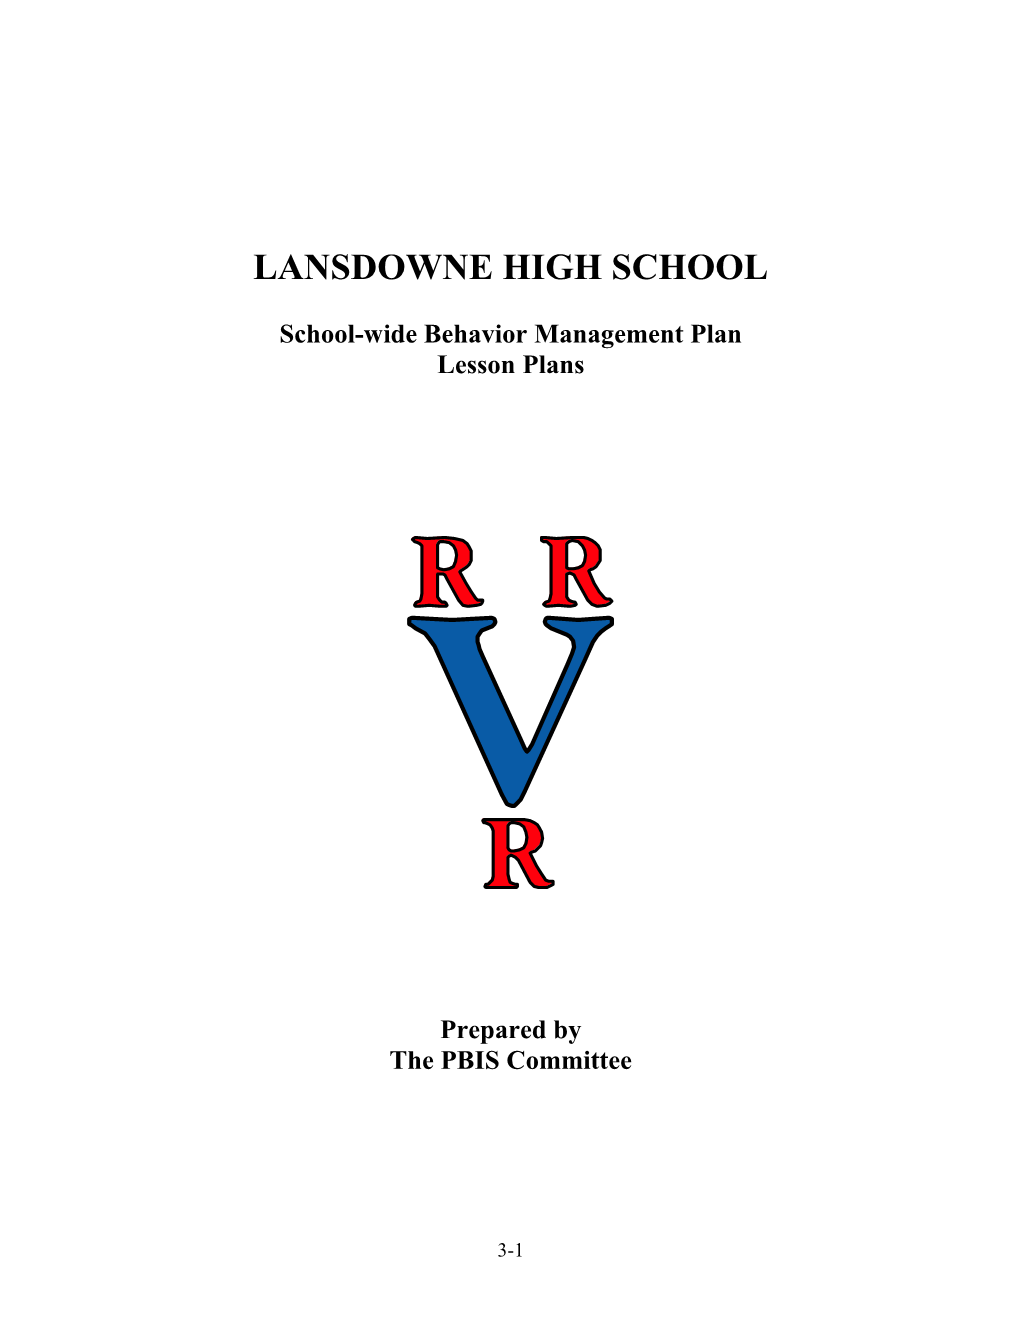 Lansdowne High School